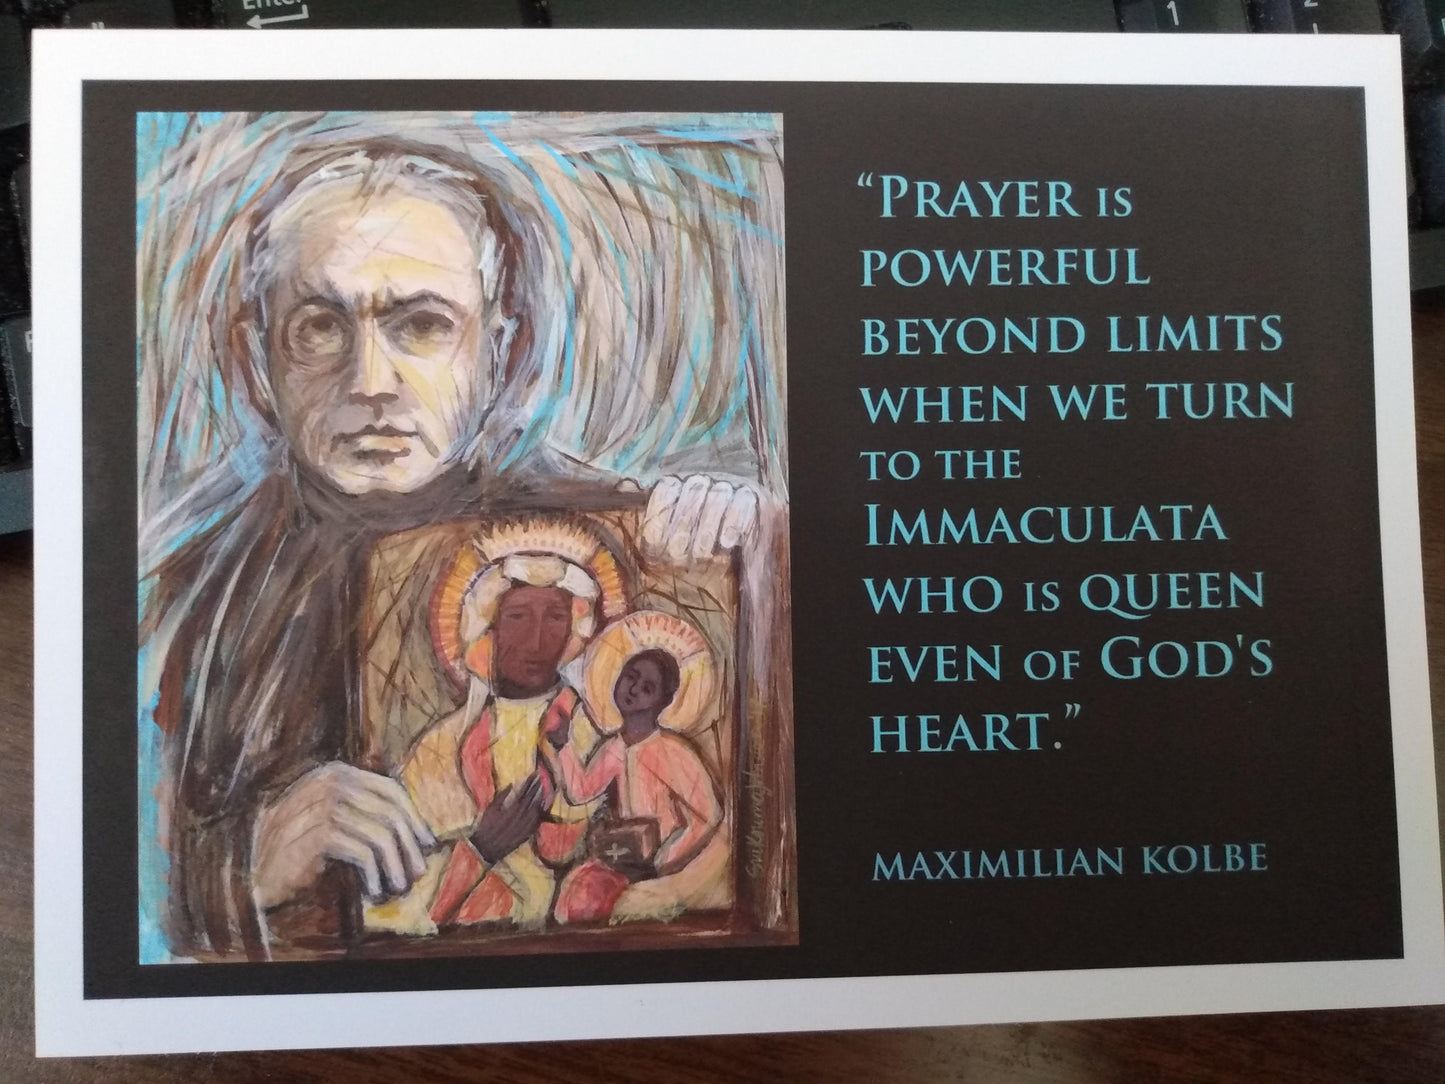 Maximilian Kolbe quote – 8.5x11" – Catholic Art Print – Wall Art – Authentic Quote